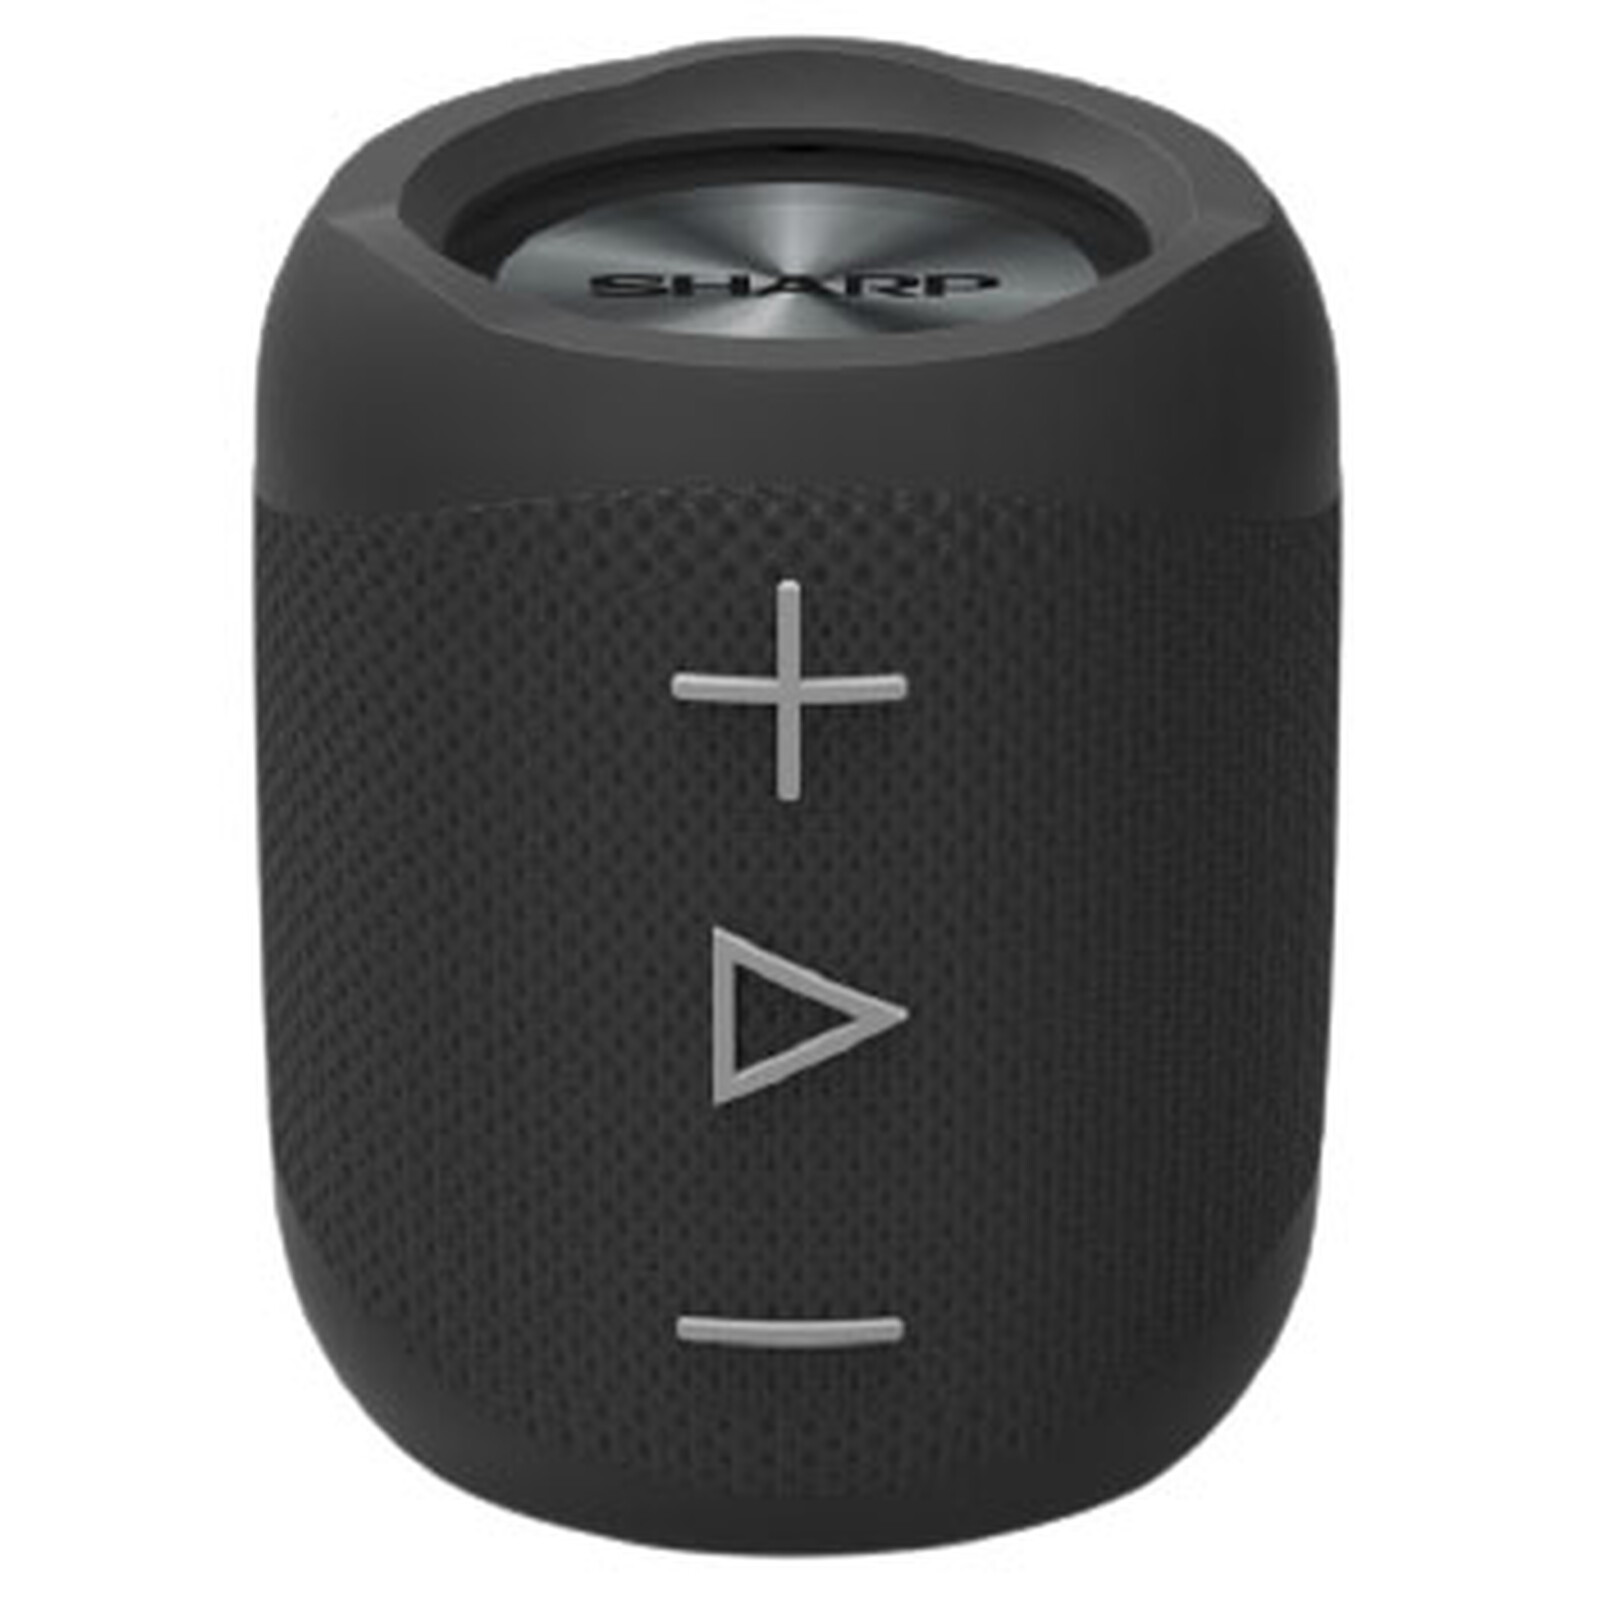 Marshall Middleton Black/Copper - Bluetooth speaker - LDLC 3-year warranty